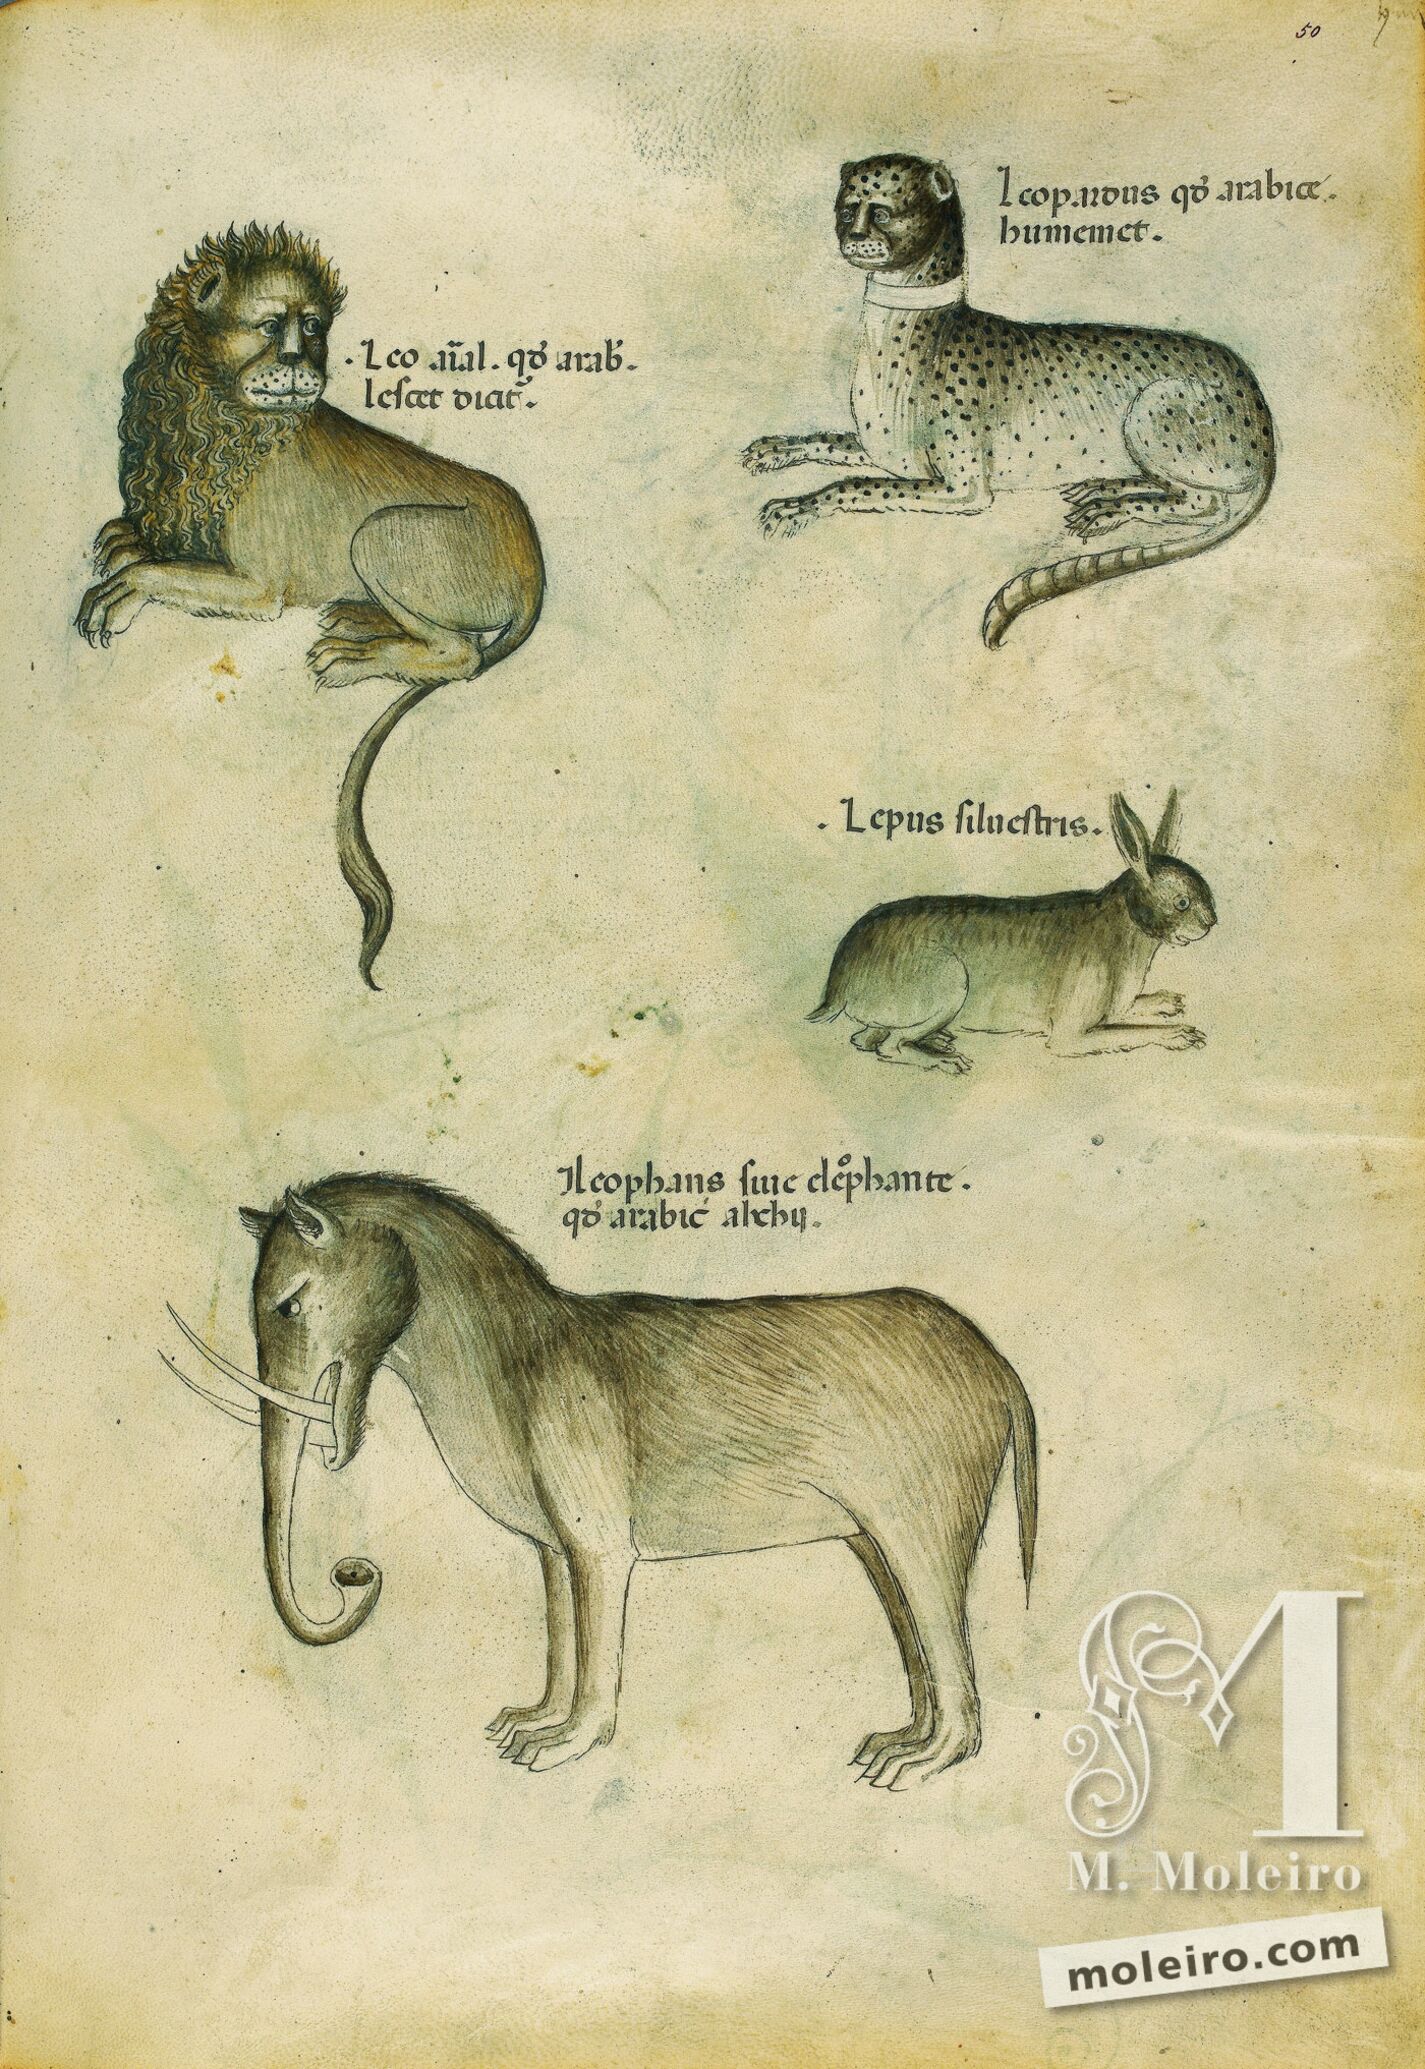 f. 50r: León; leopardo; liebre silvestre; elefante